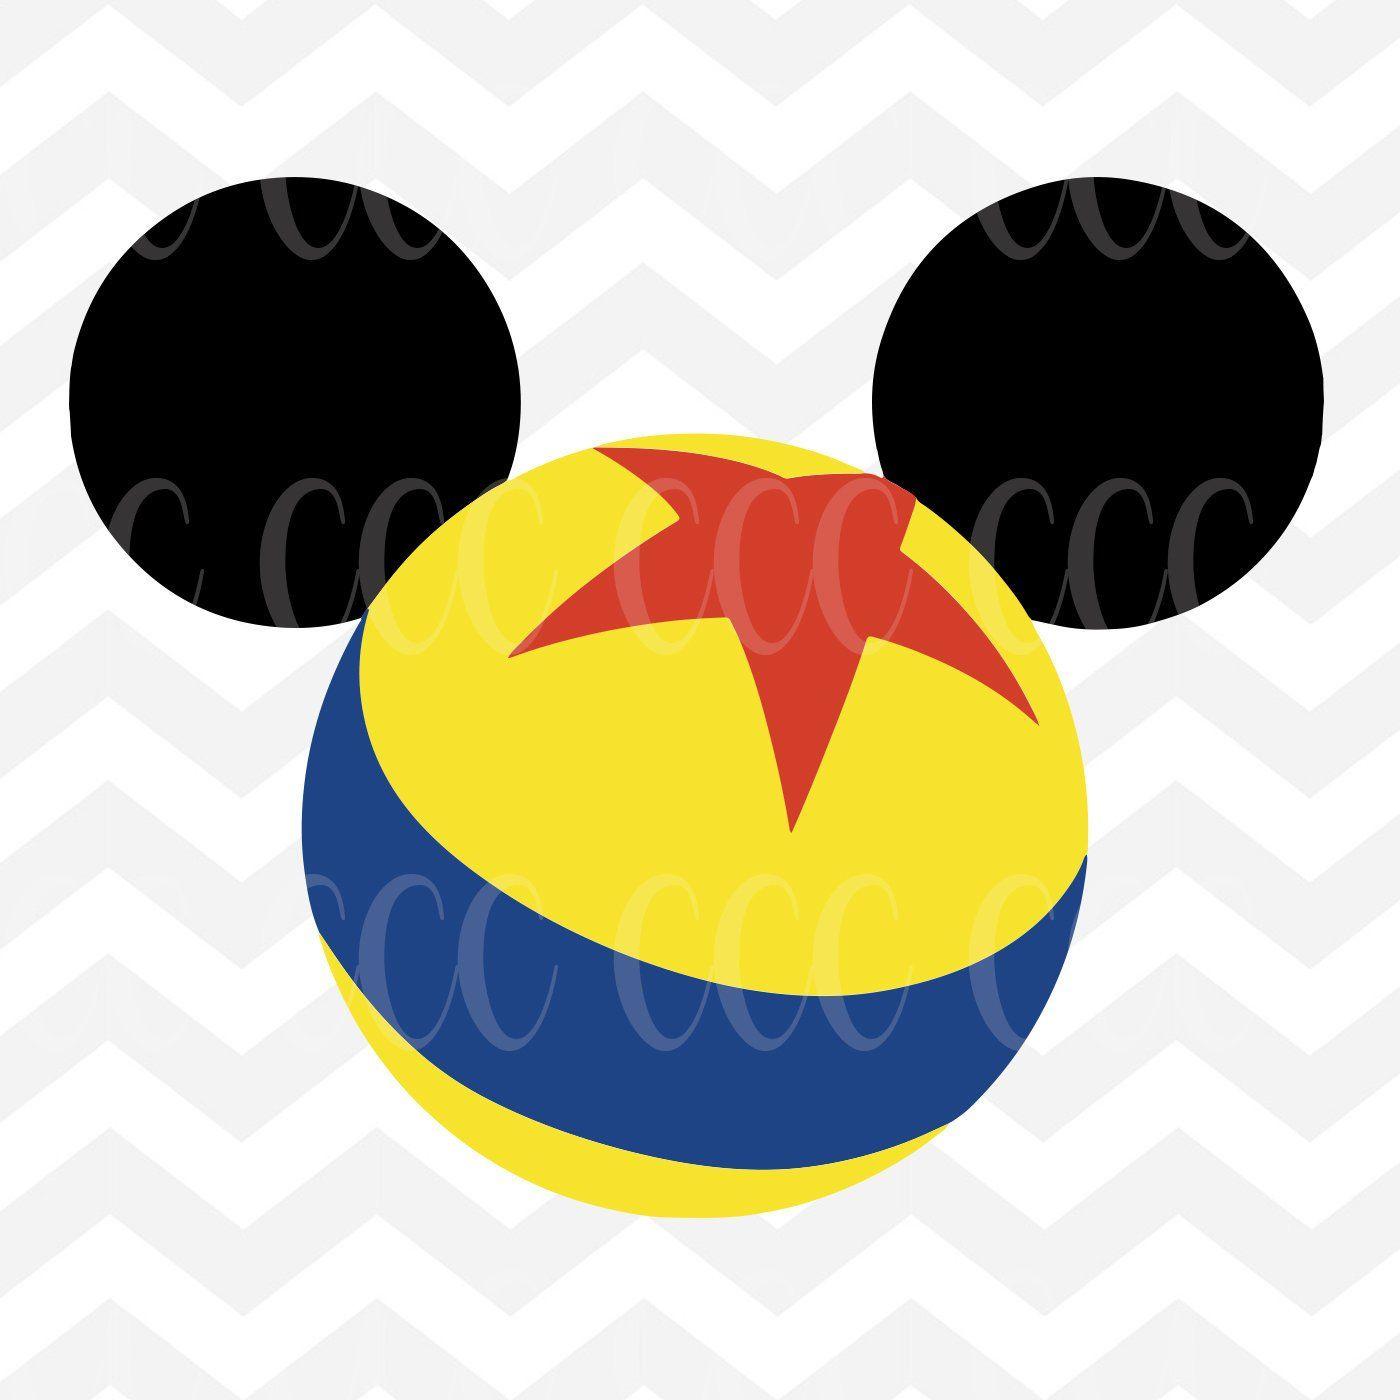 Pixar Ball Logo - Mickey Mouse Pixar Luxo Ball SVG Cutting File | Etsy